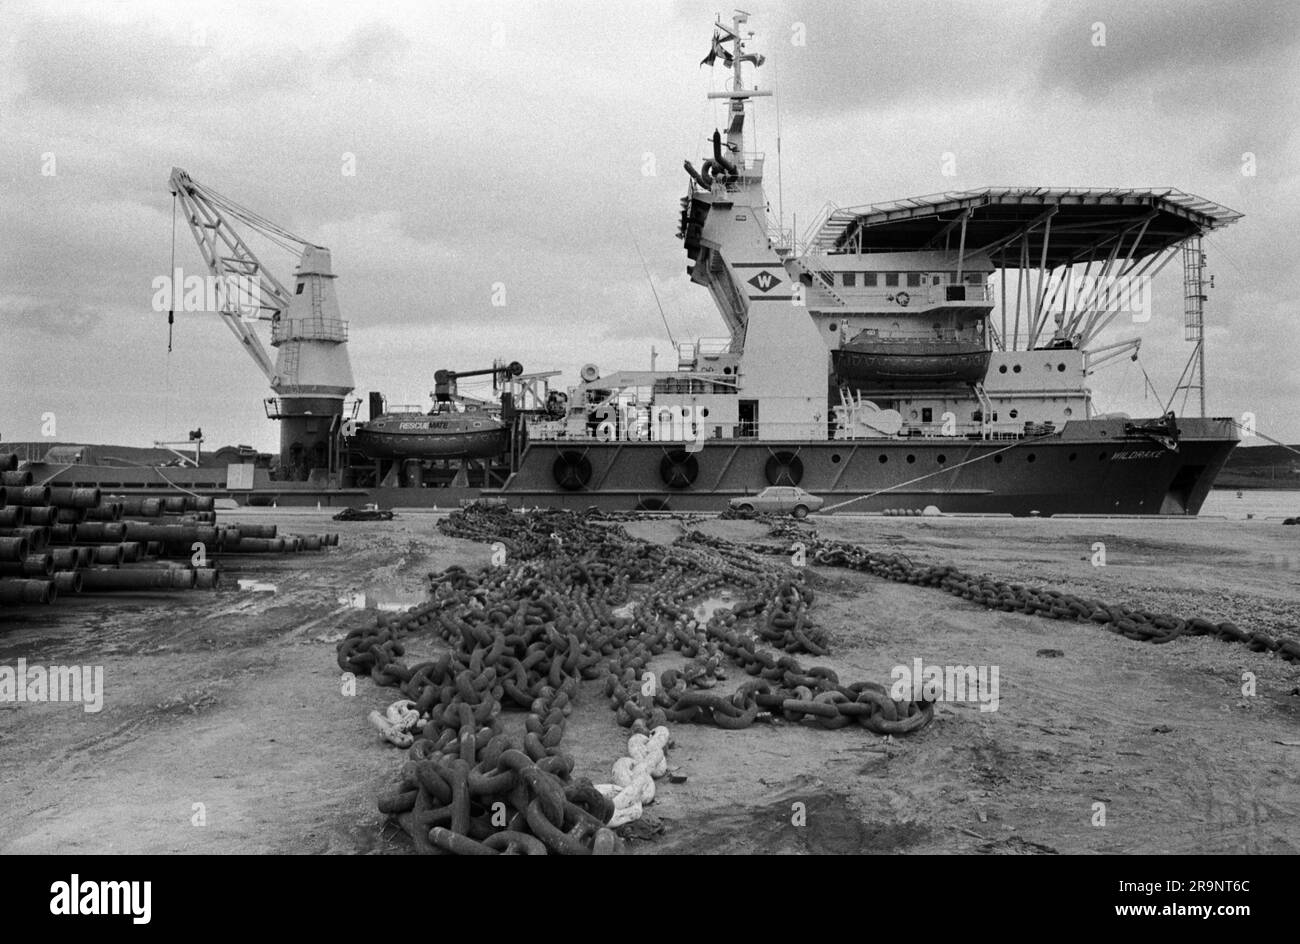 Oil industry vessel. Lerwick, Shetlands Mainland, Shetland Islands, Scotland, circa 1979. 1970s HOMER SYKES Stock Photo